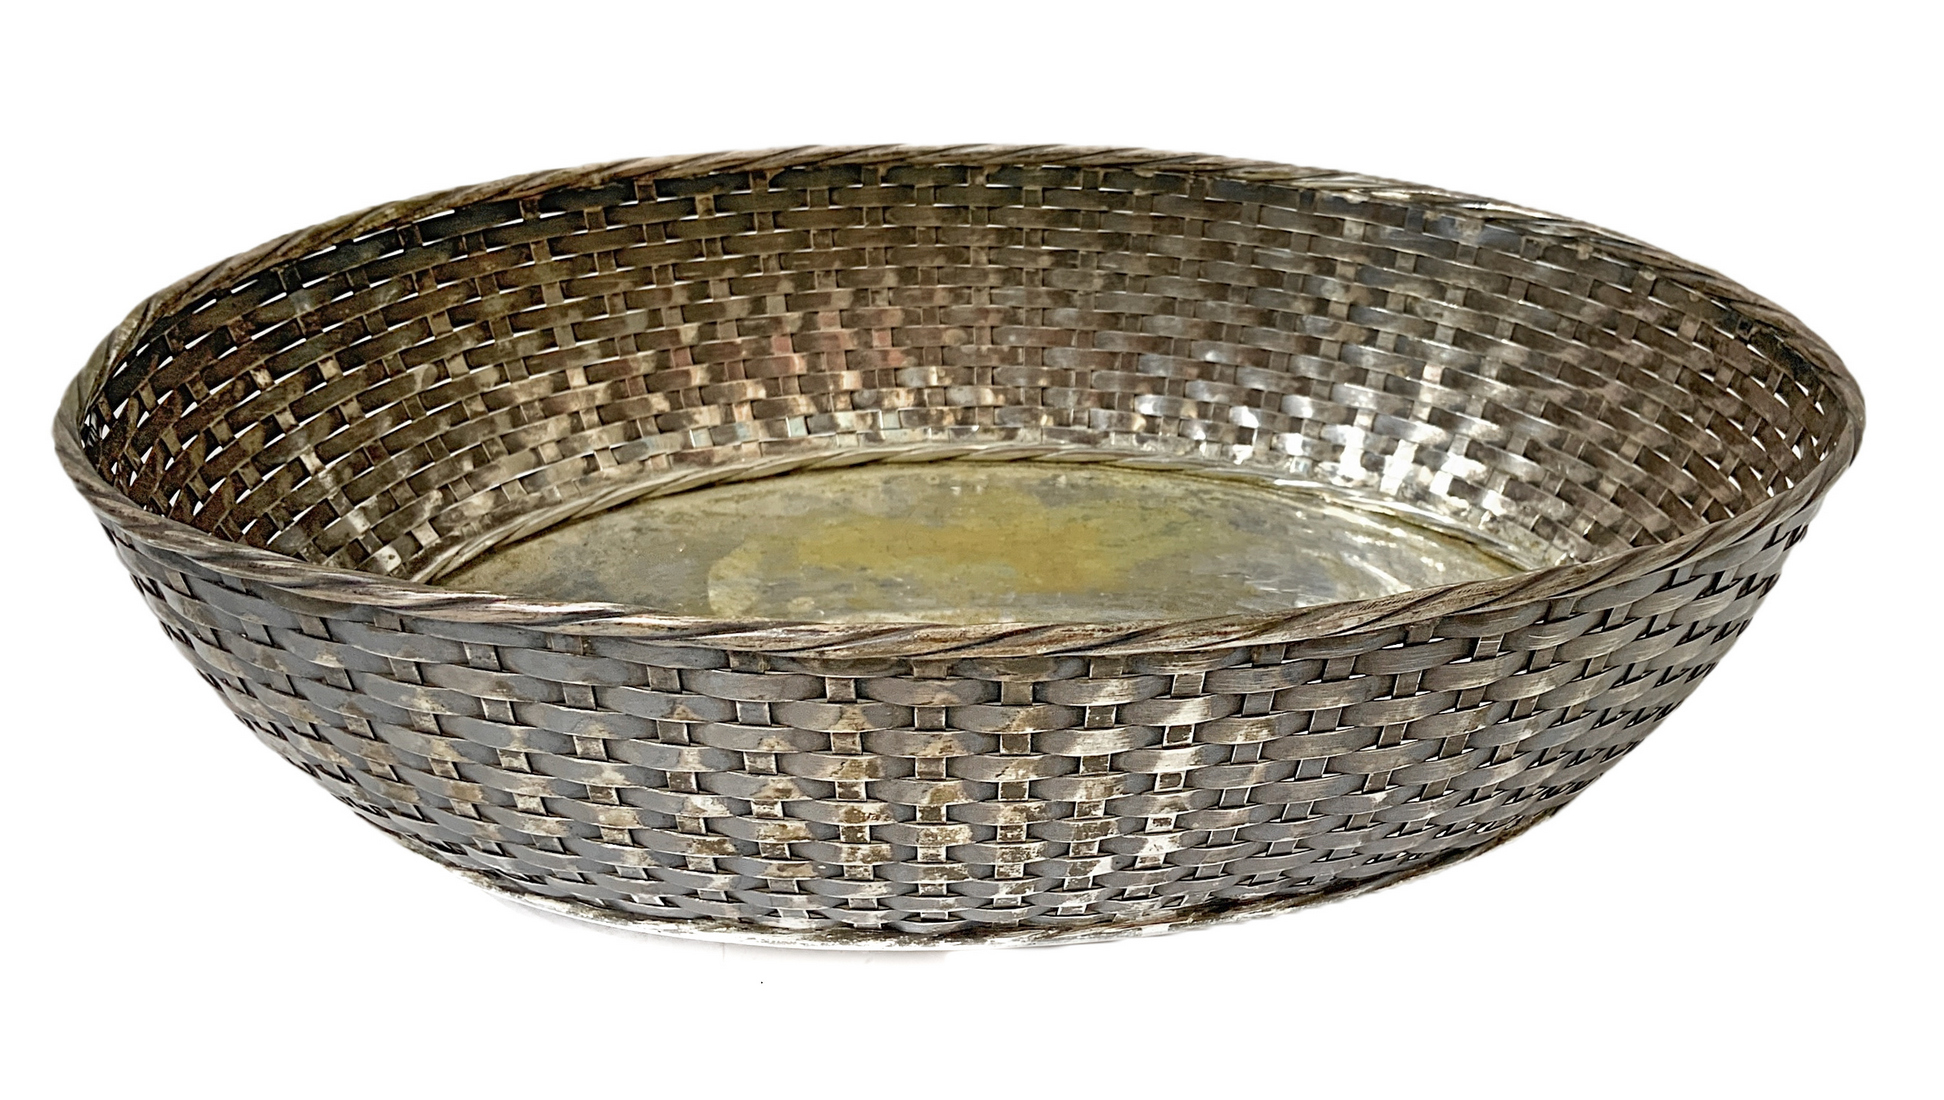 silver oval centerpiece, a woven basket, early twentieth century. Gr 514. H 8 cm x27x28